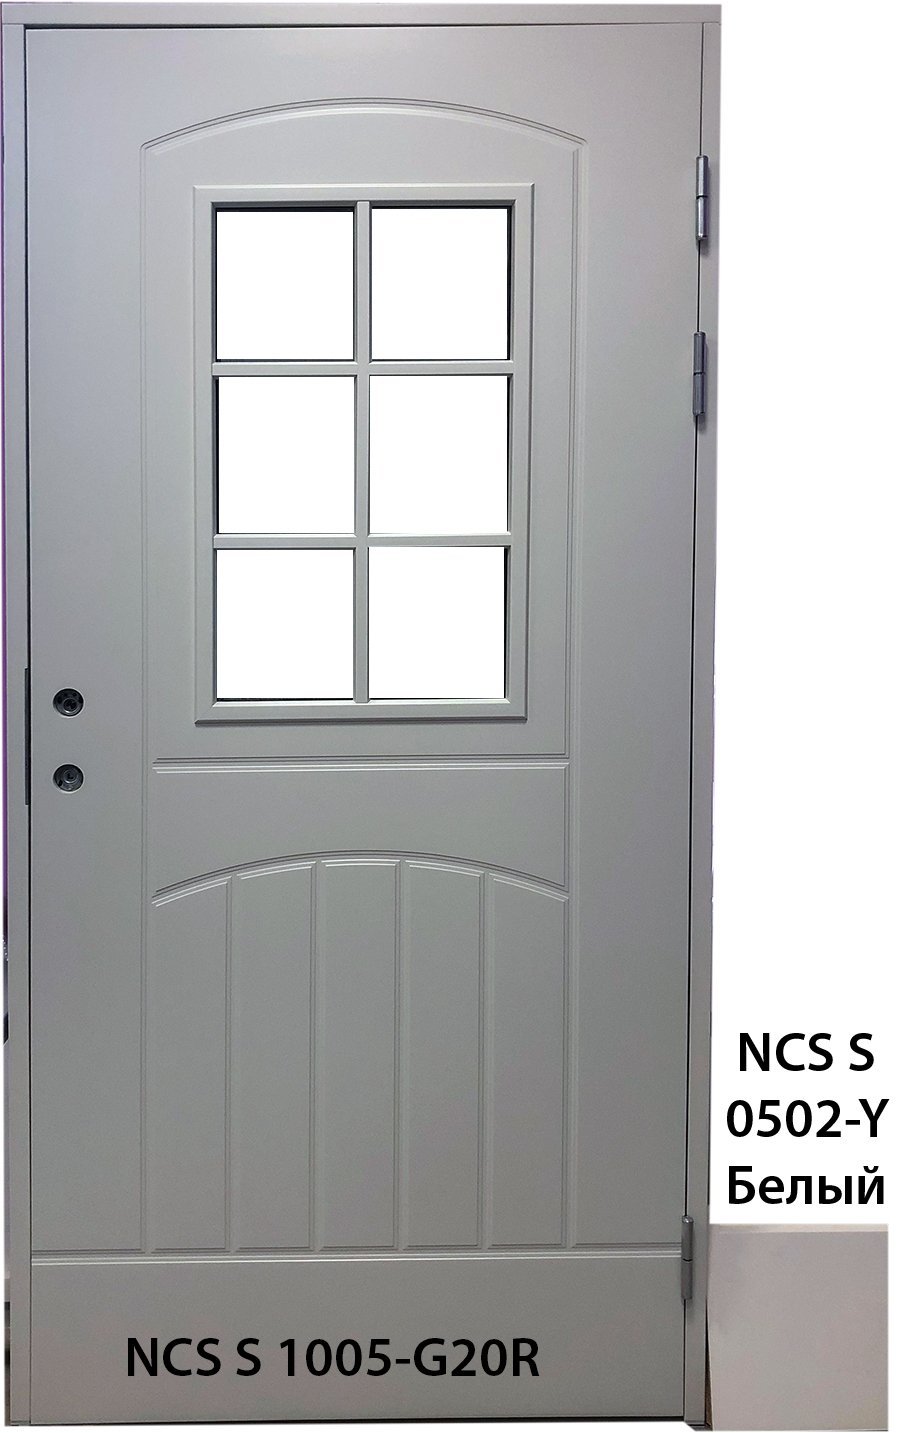 фото дверь swedoor by jeld-wen модель f2000 w71 ncs s 3005-r80b 10*21 лев